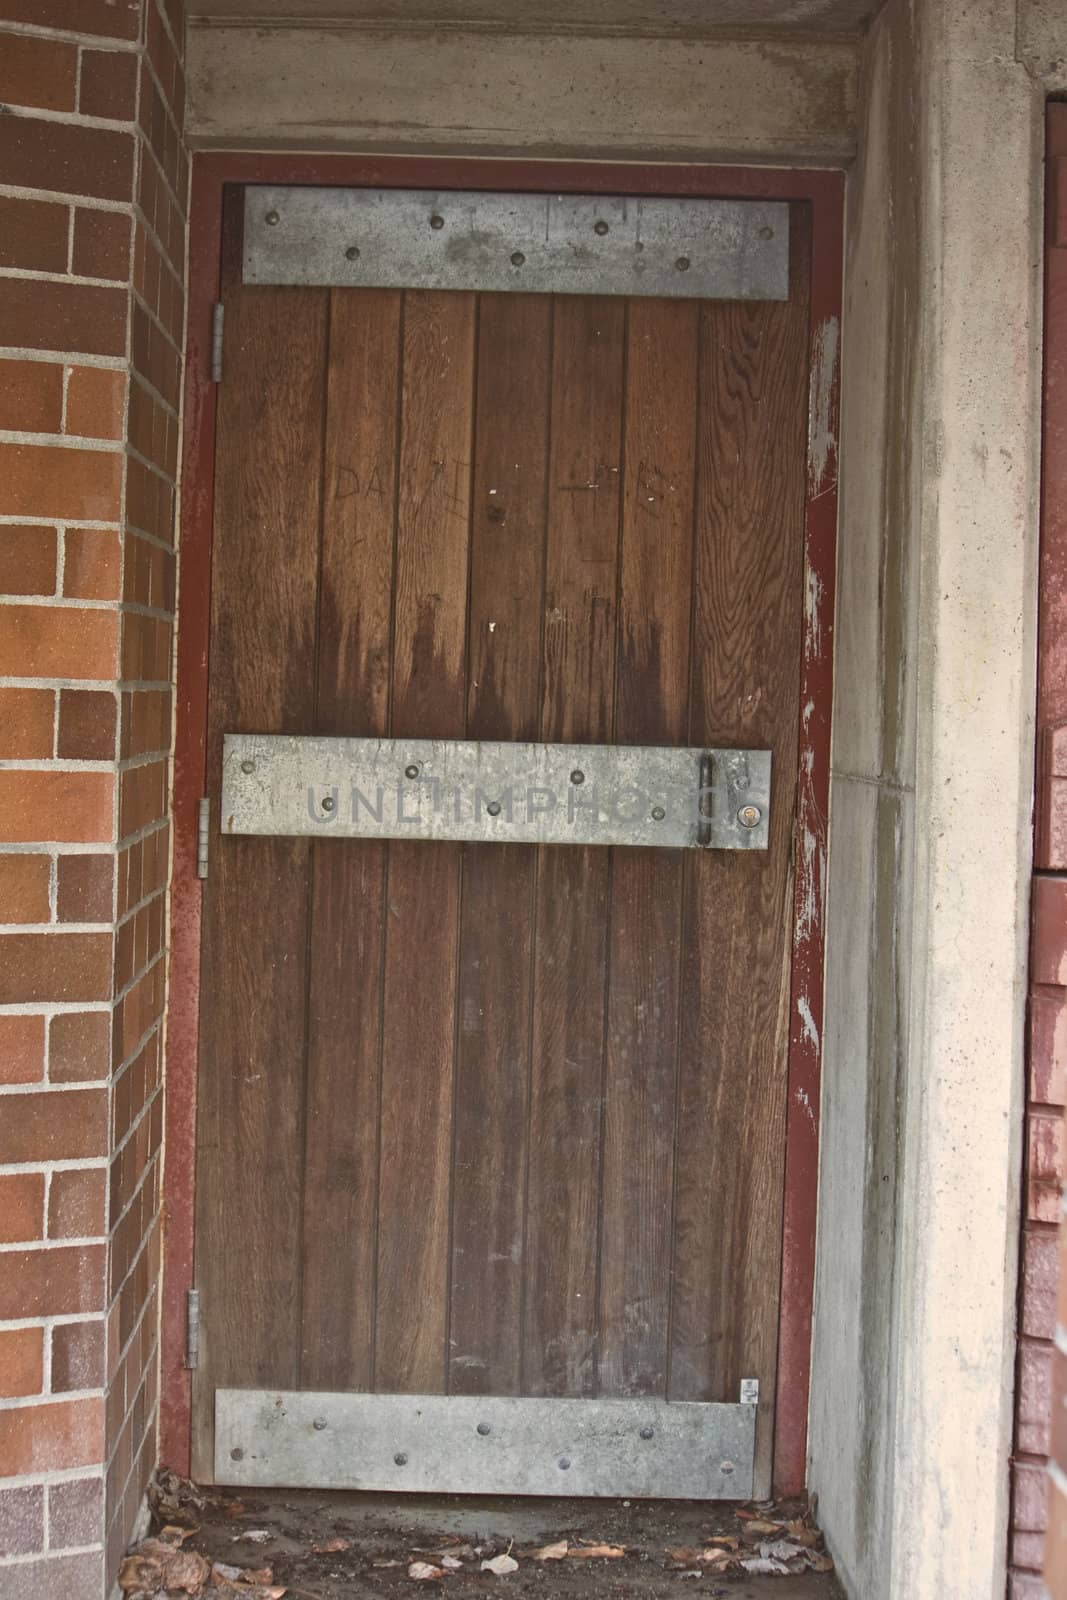 Old Looking Steel Reinforced Door with Wood Boards